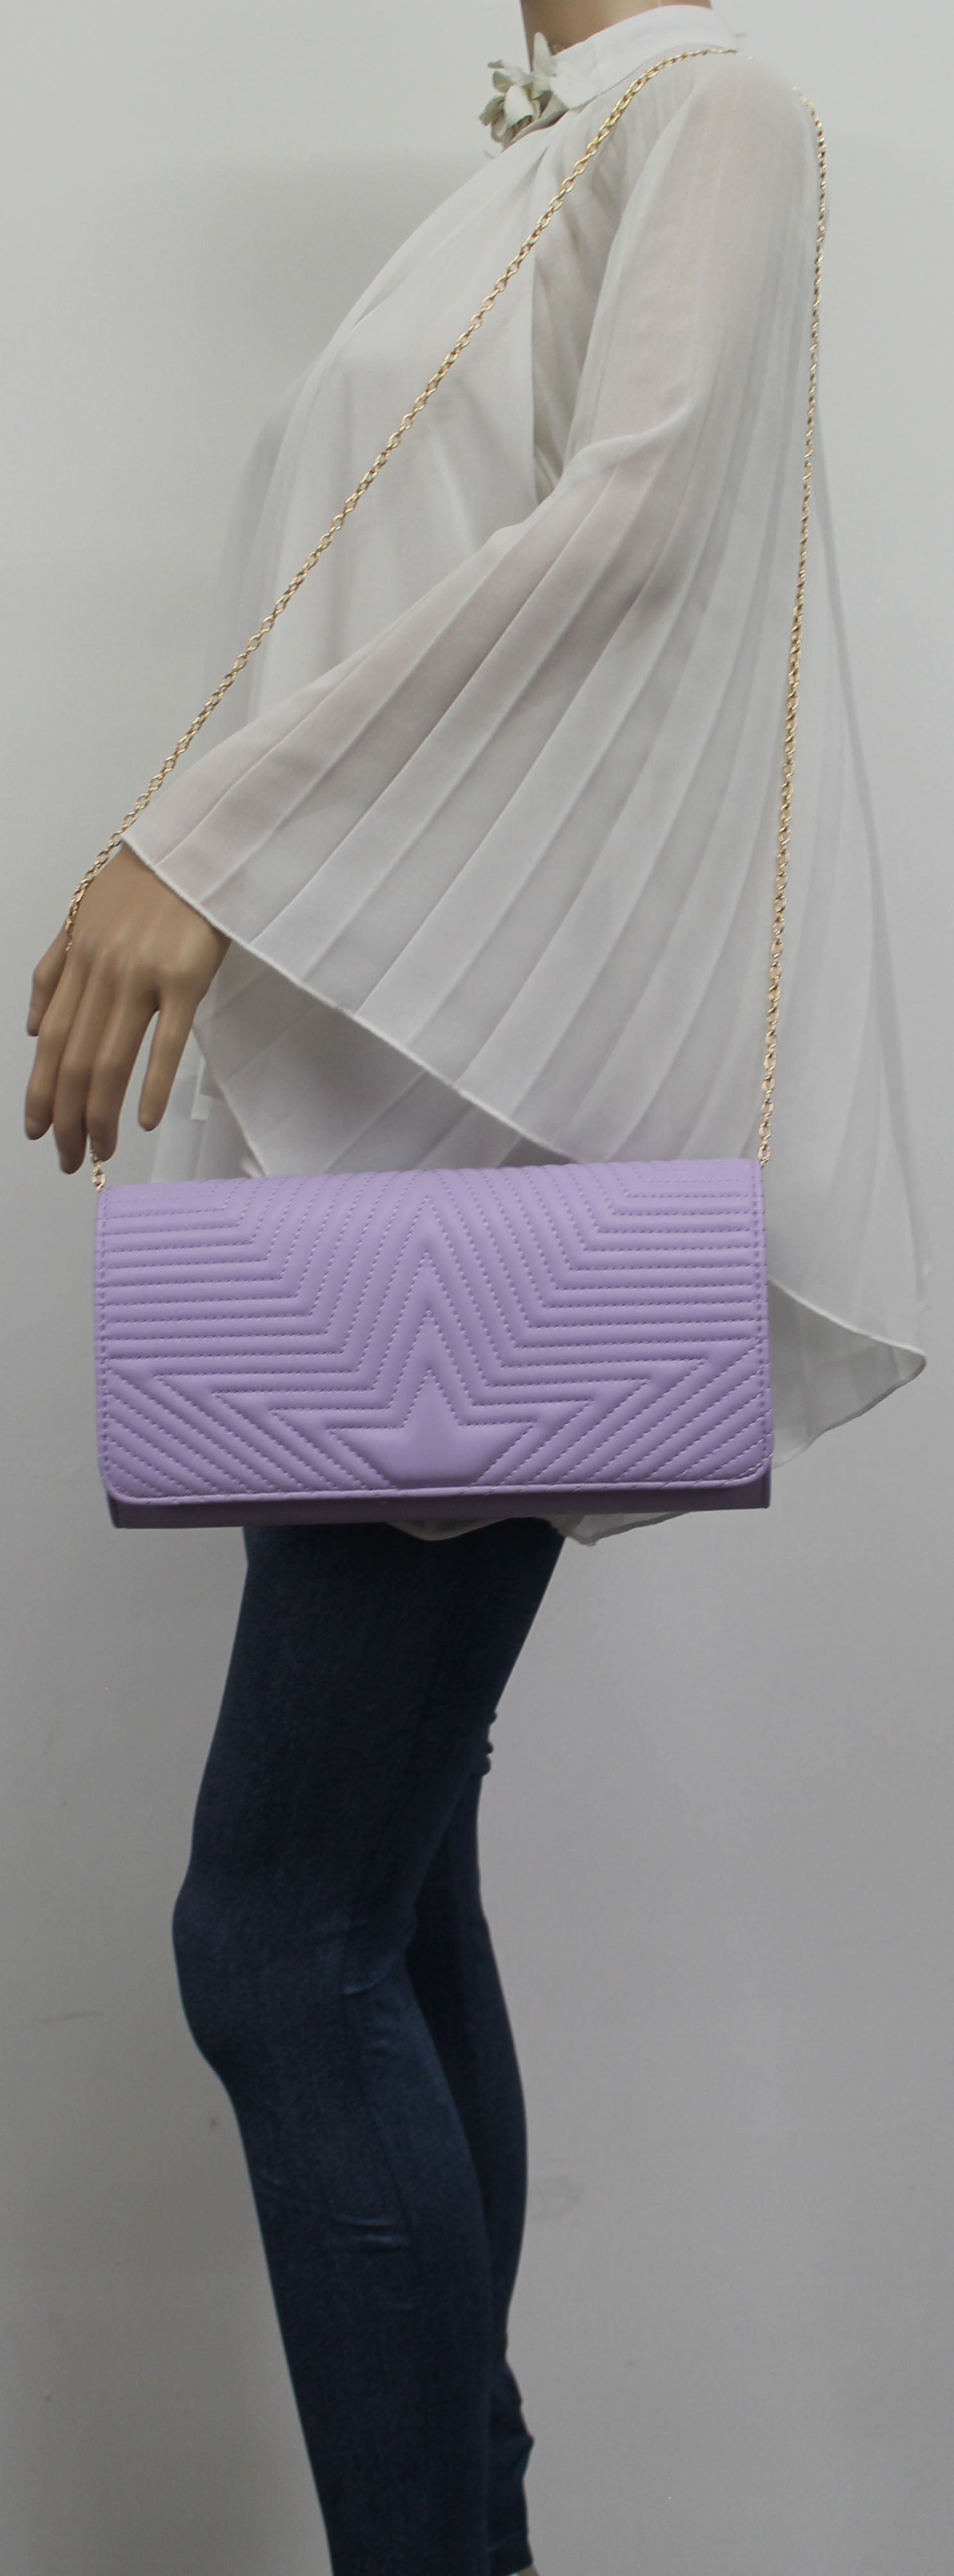 SWANKYSWANS Michelle Clutch Bag Lilac Cute Cheap Clutch Bag For Weddings School and Work